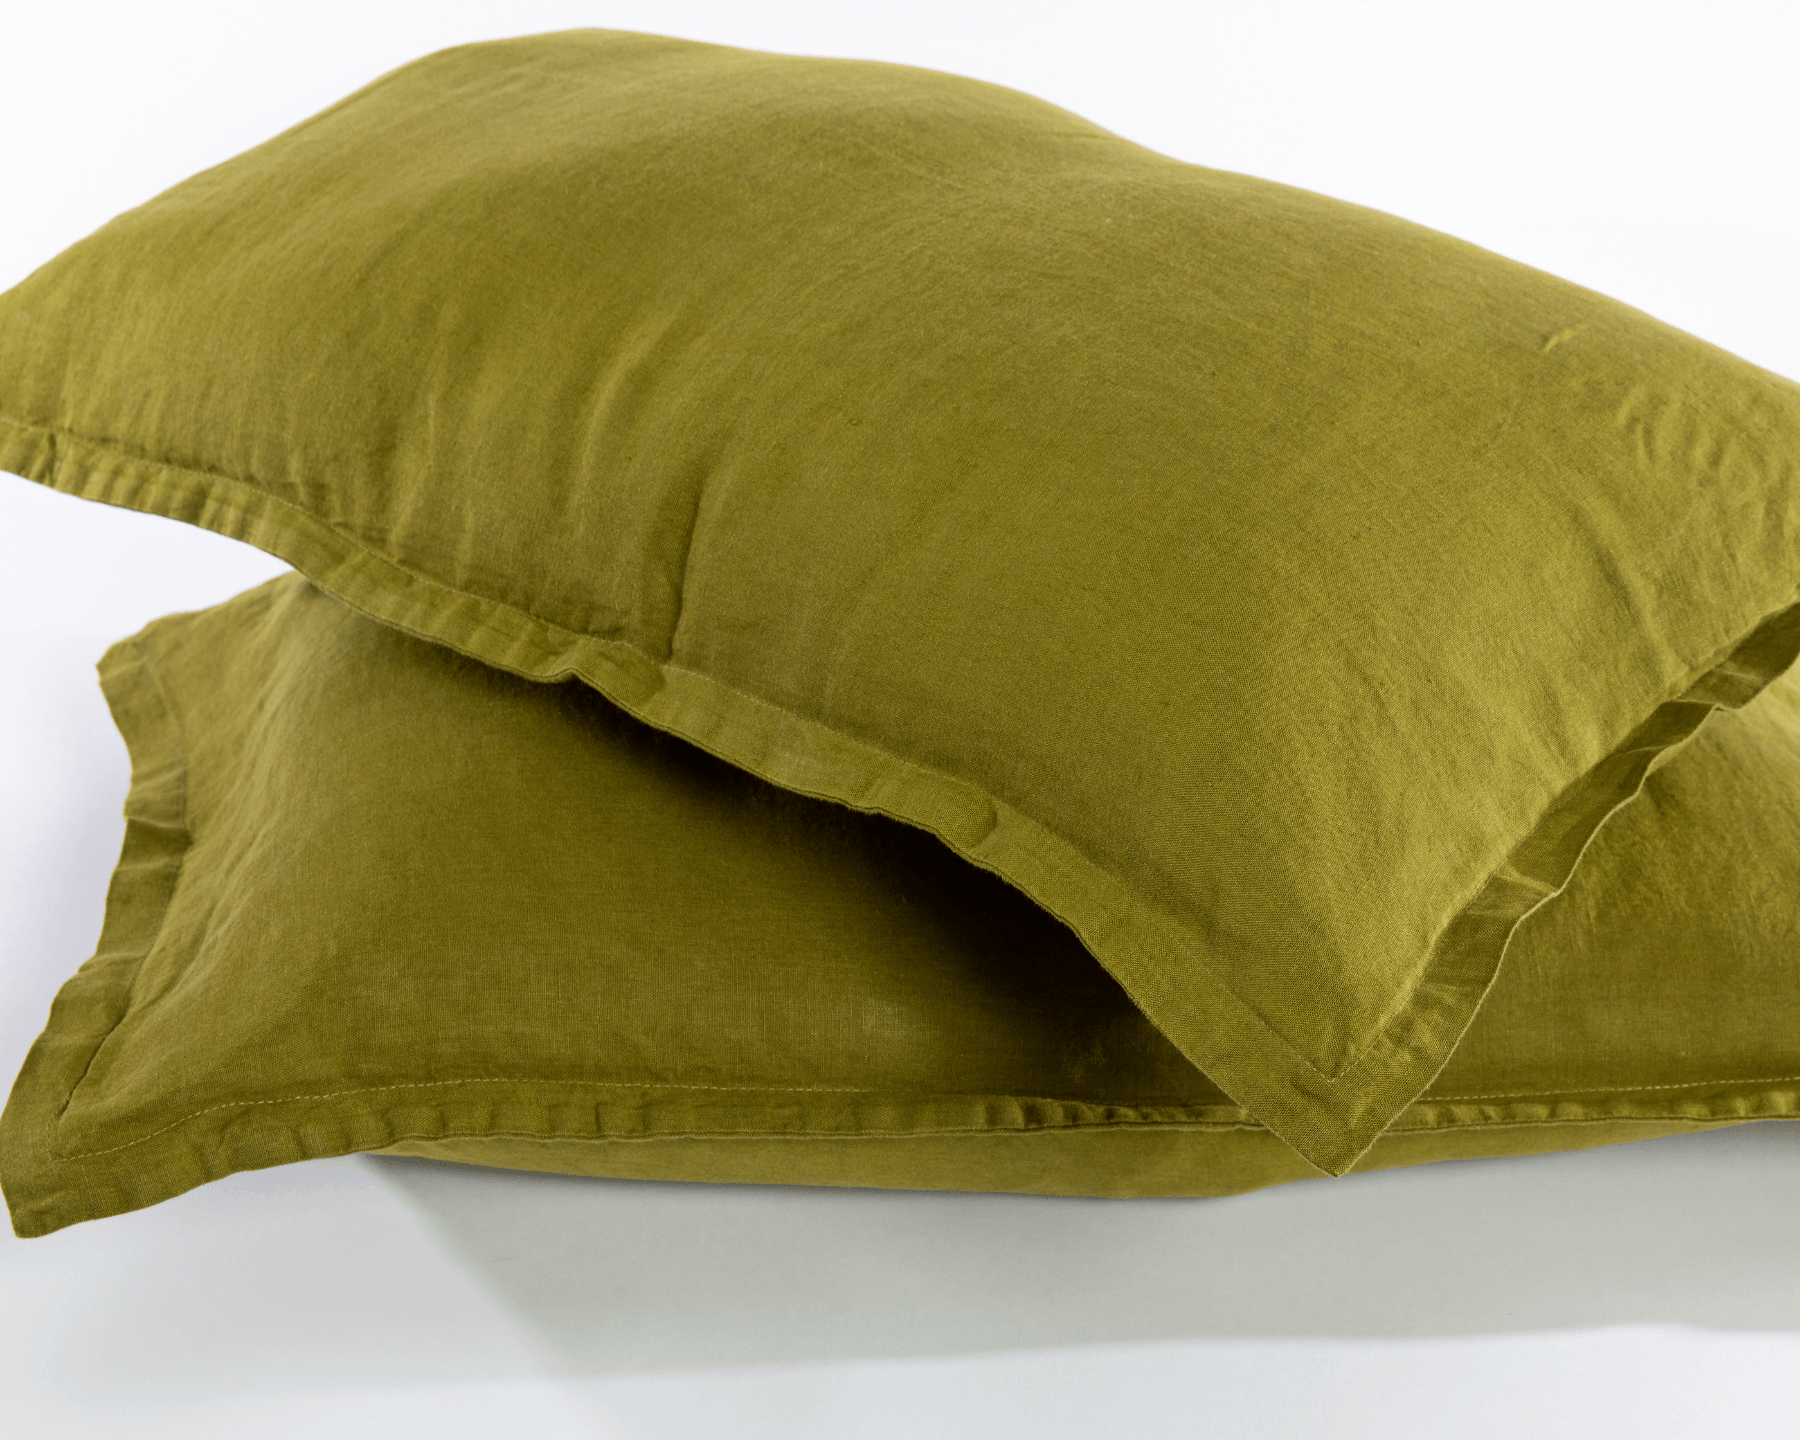 Olive green organic European linen pillowcases